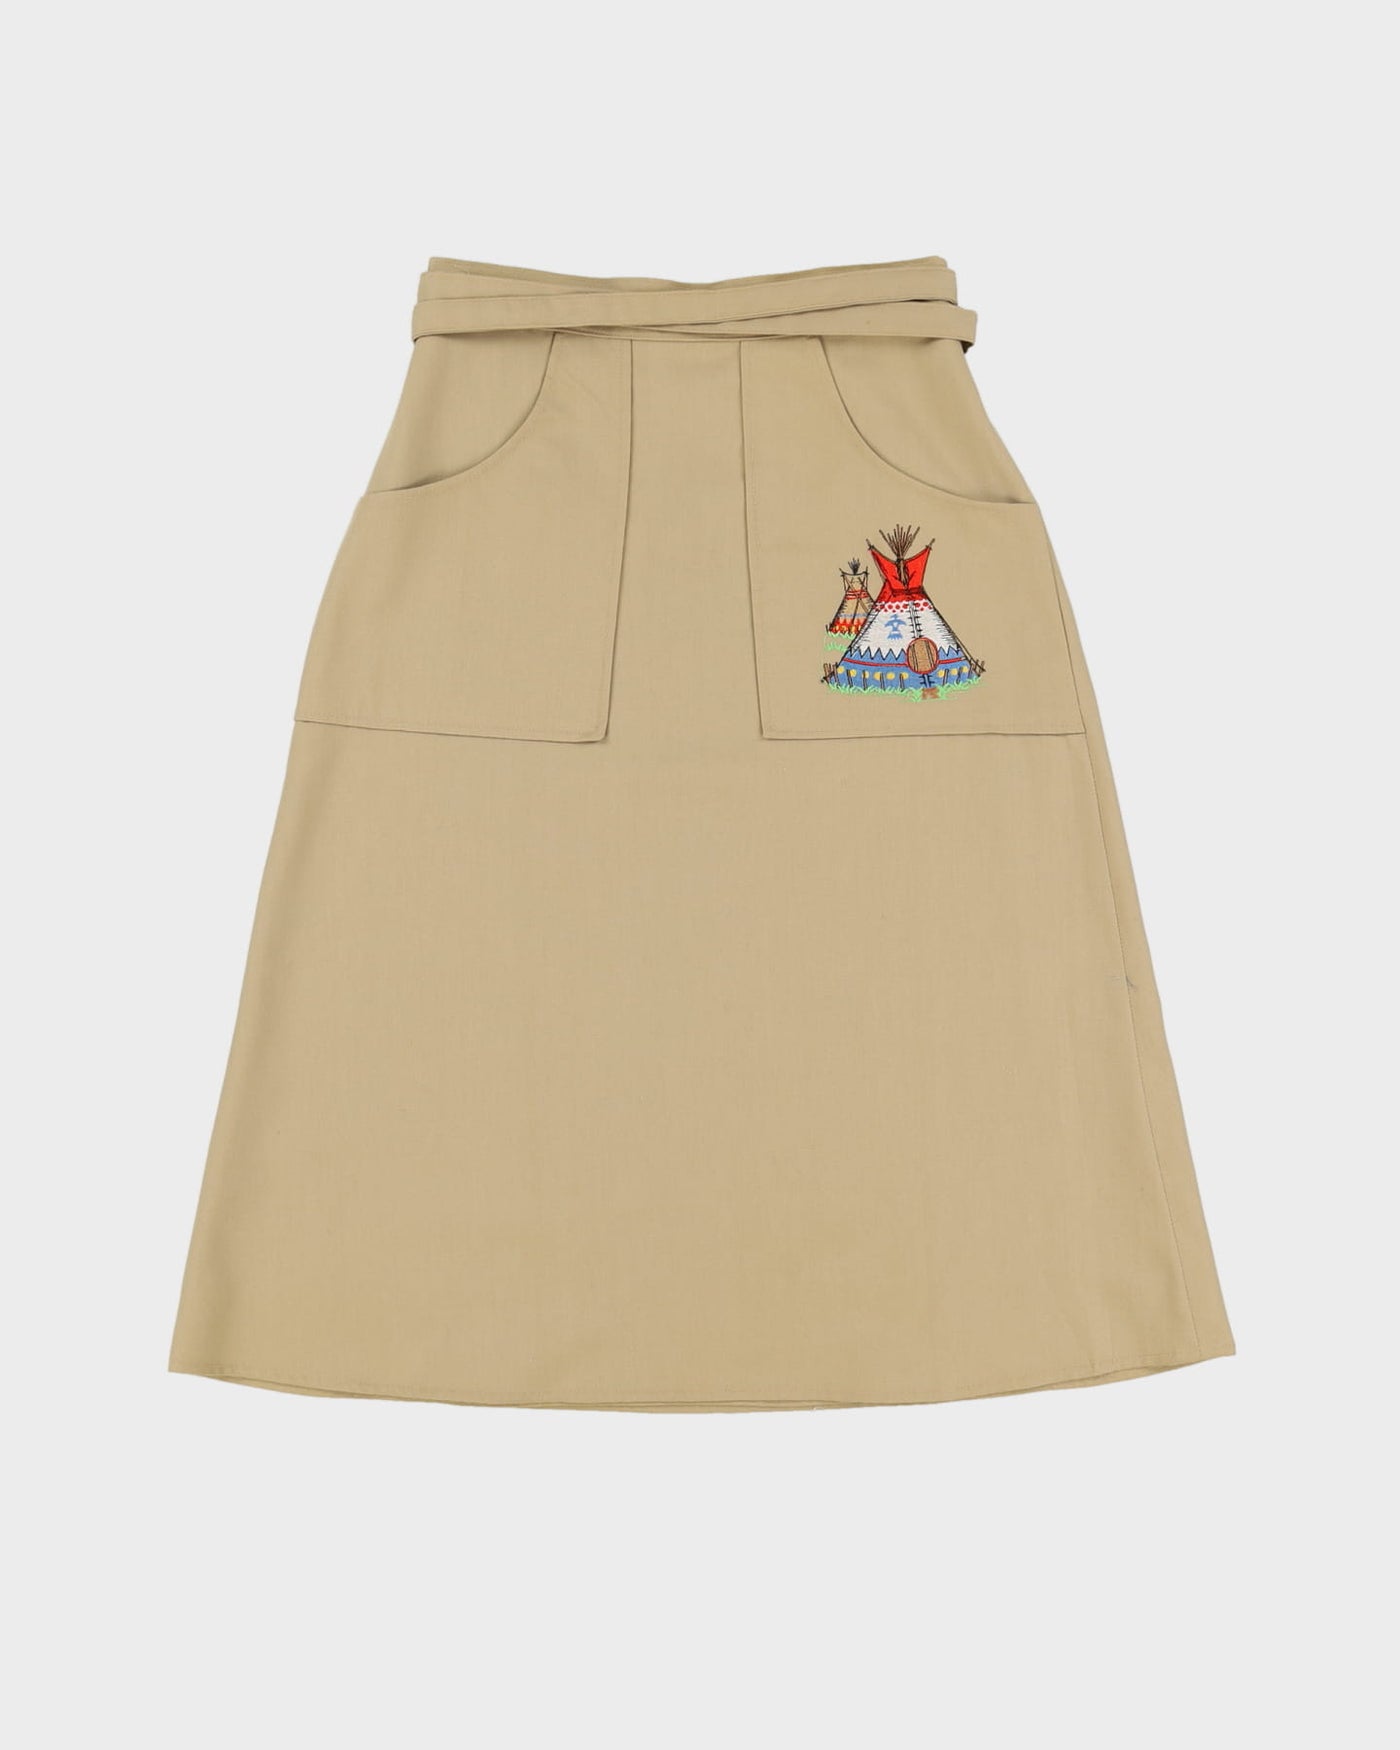 Vintage 1970s Beige Wrap Skirt - S